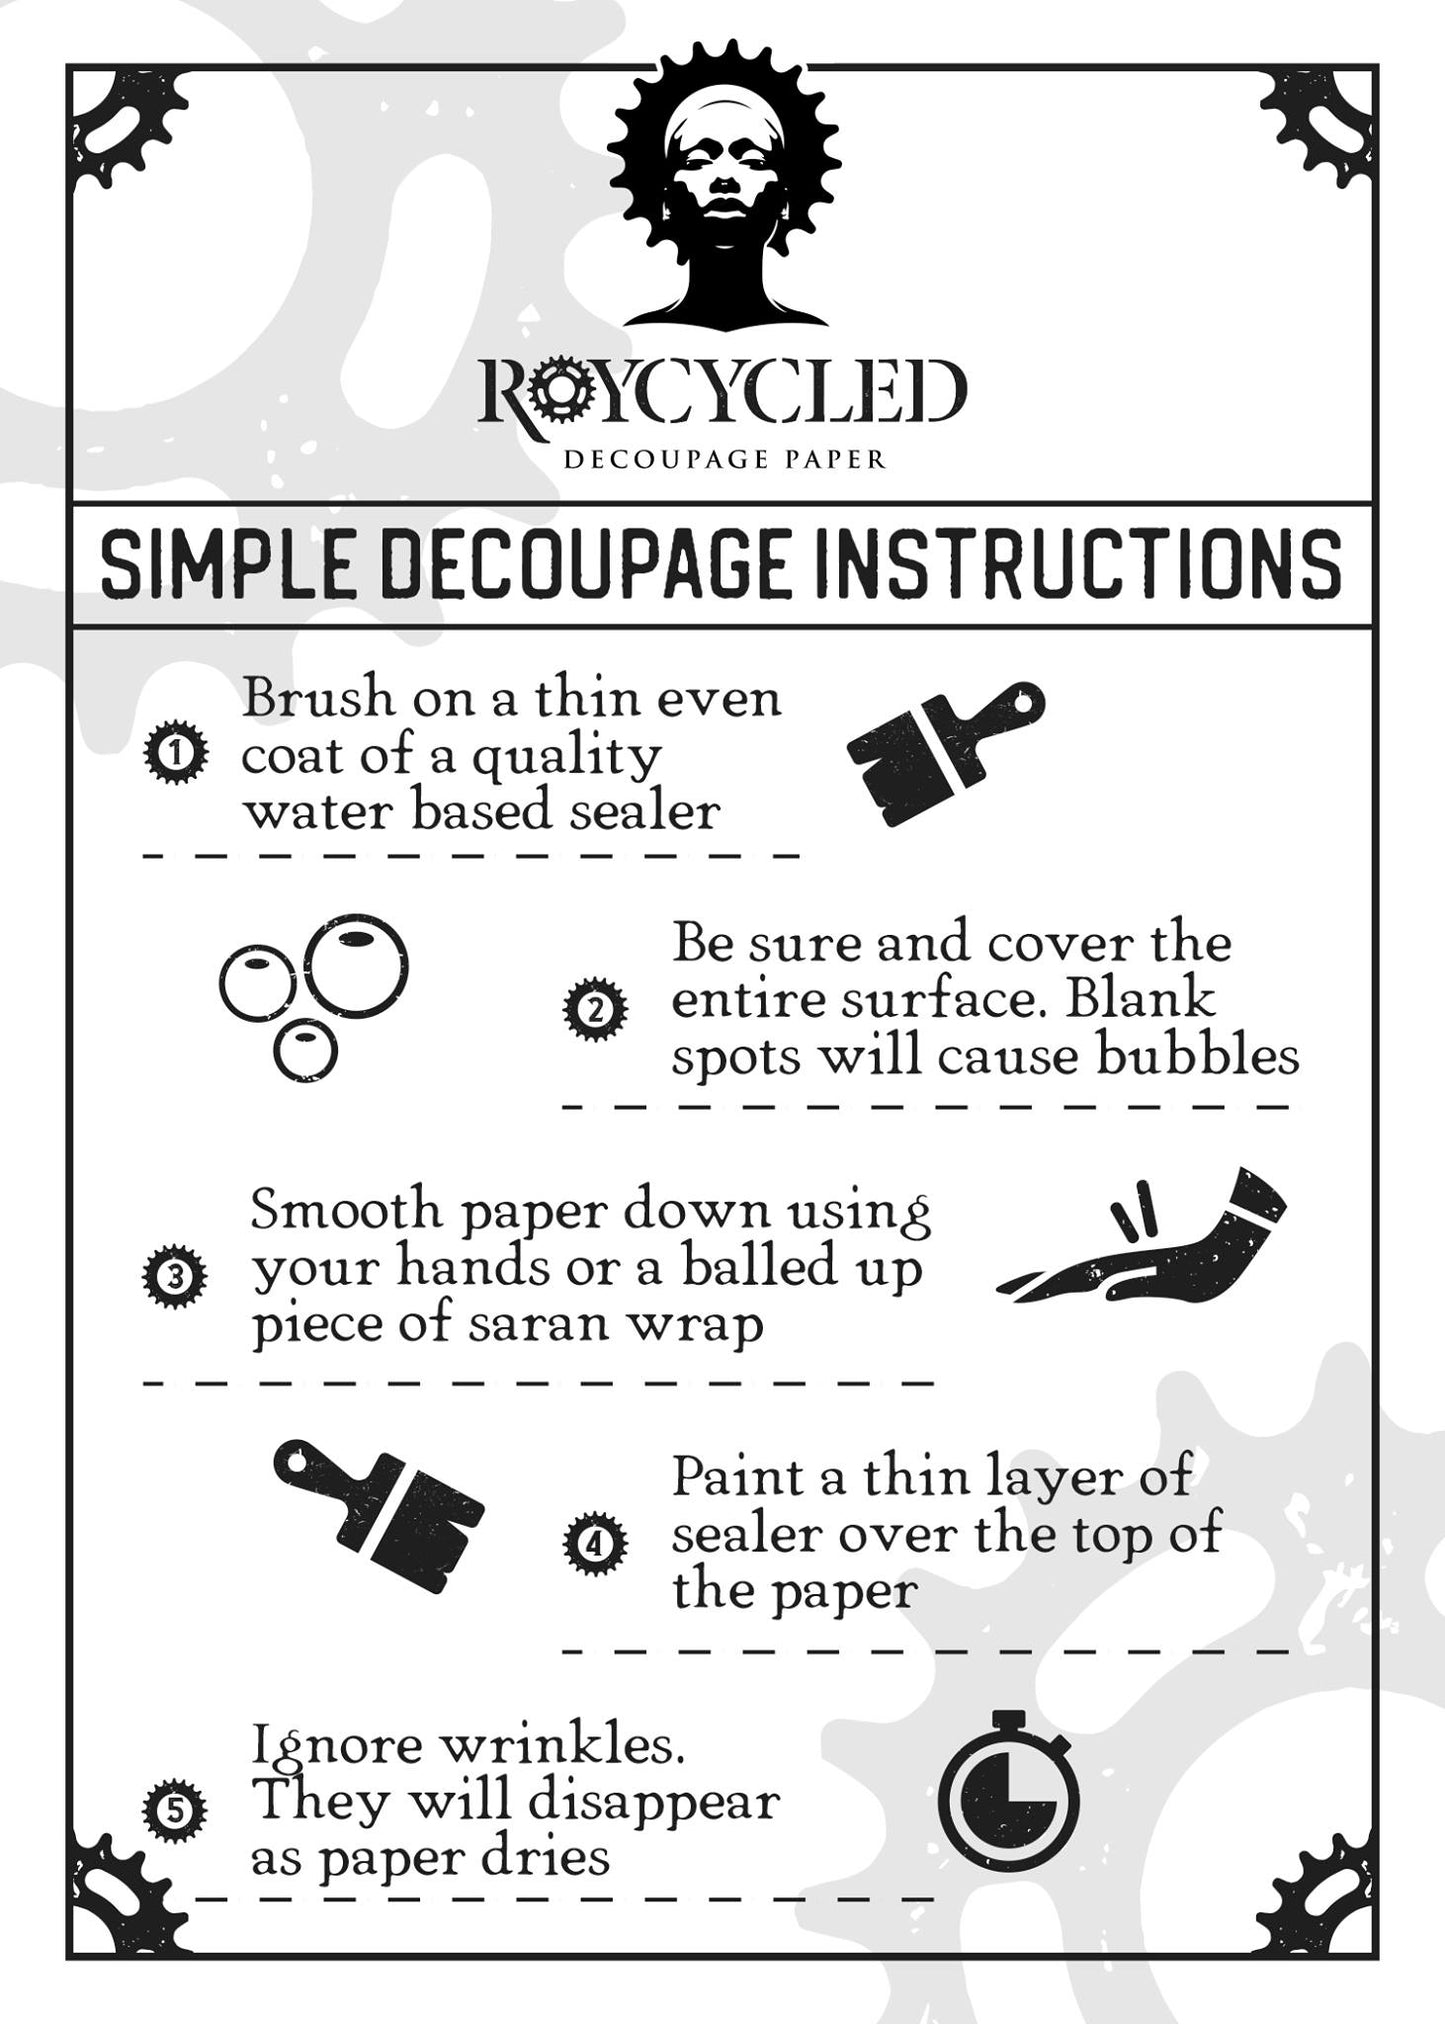 Grungy Floral Decoupage Paper